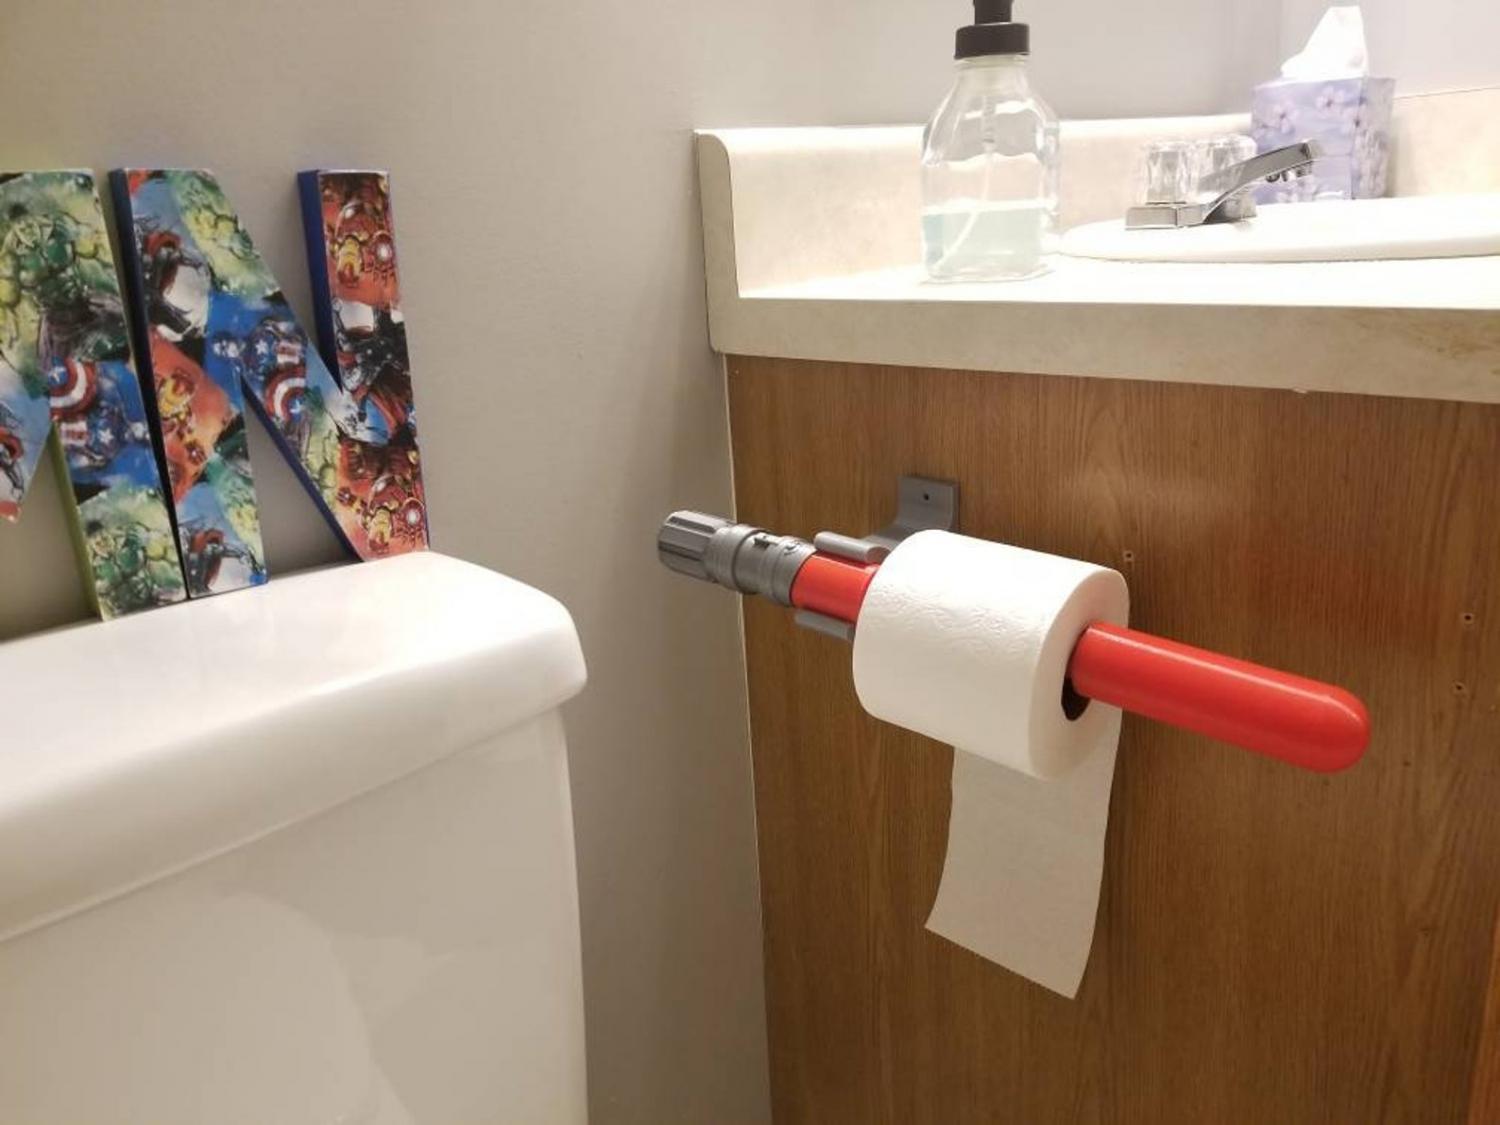 Star Wars lightsaber toilet paper holder - Wall mounted lightsaber Star Wars geeky toilet paper holder